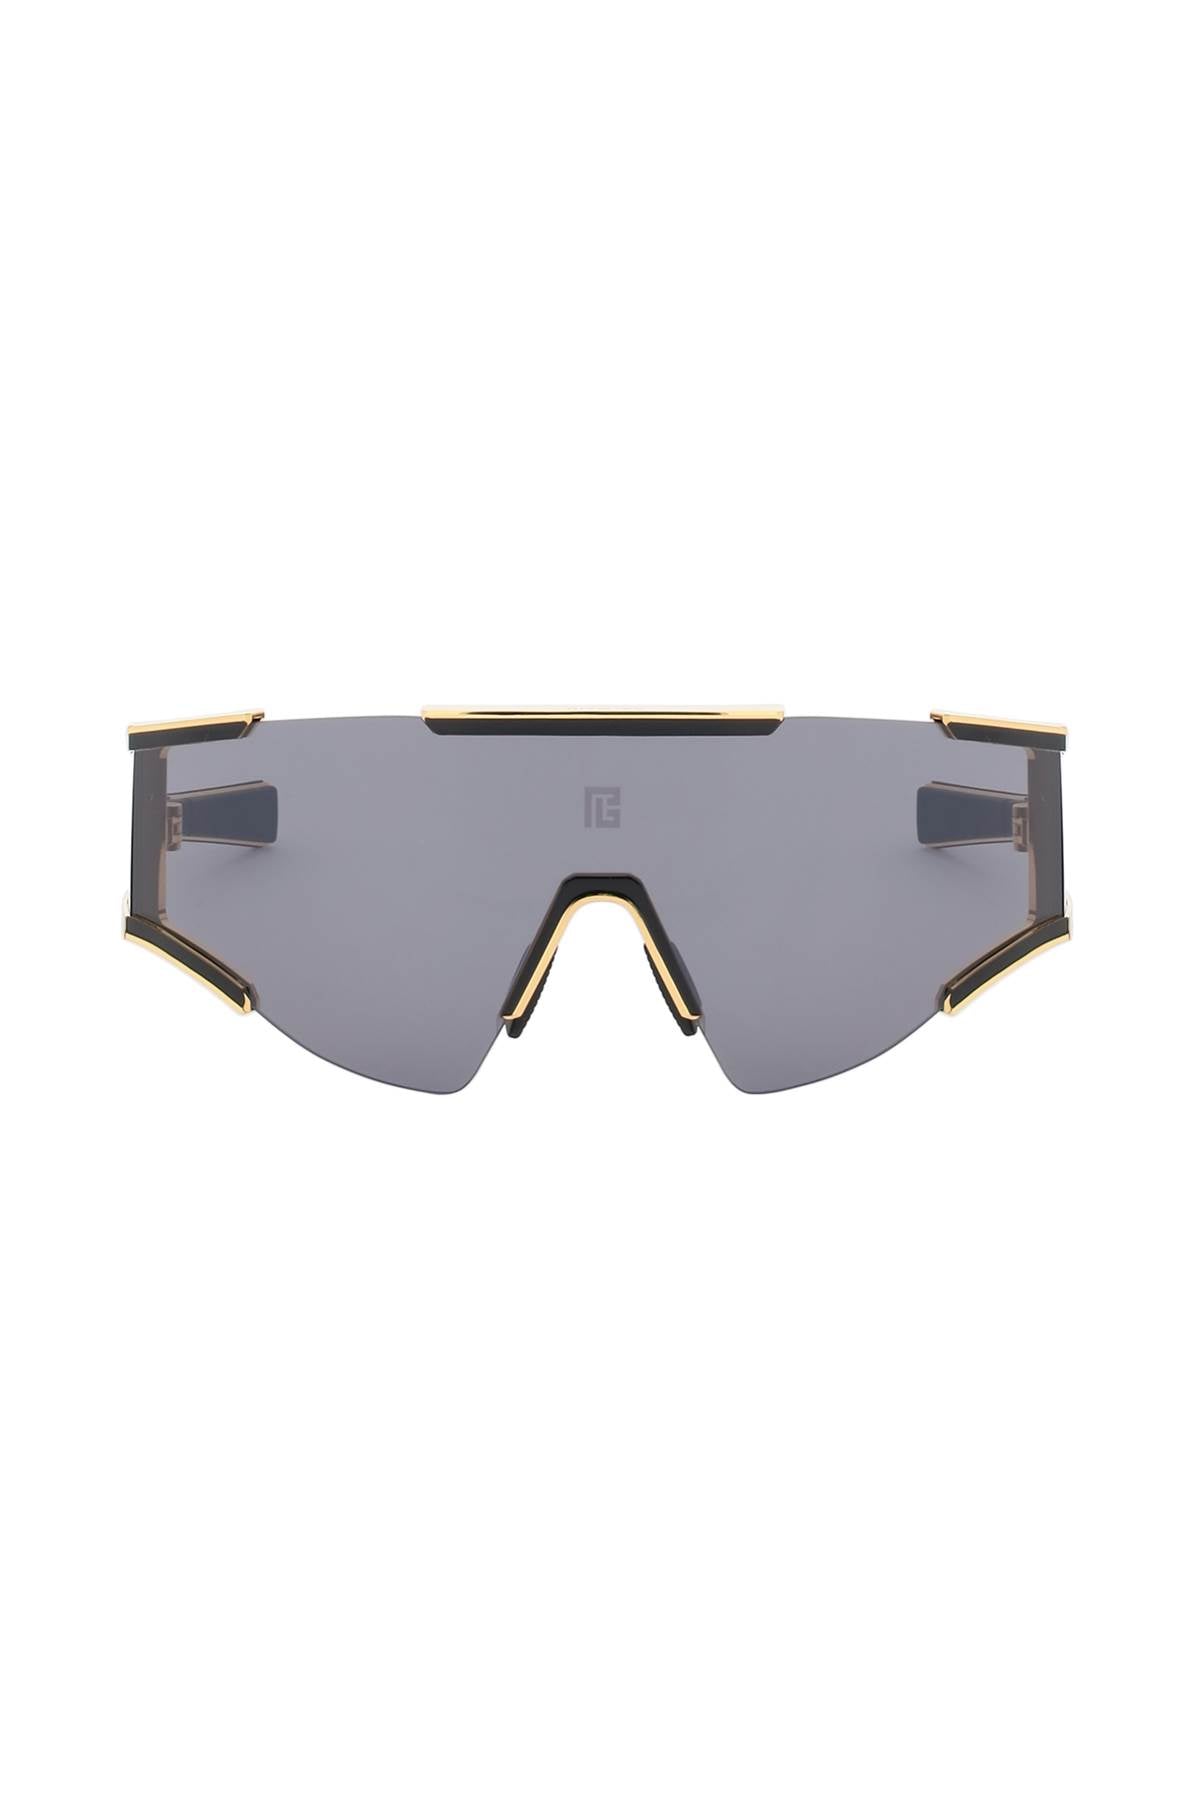 Balmain 'Fleche' Sunglasses-Balmain-Urbanheer